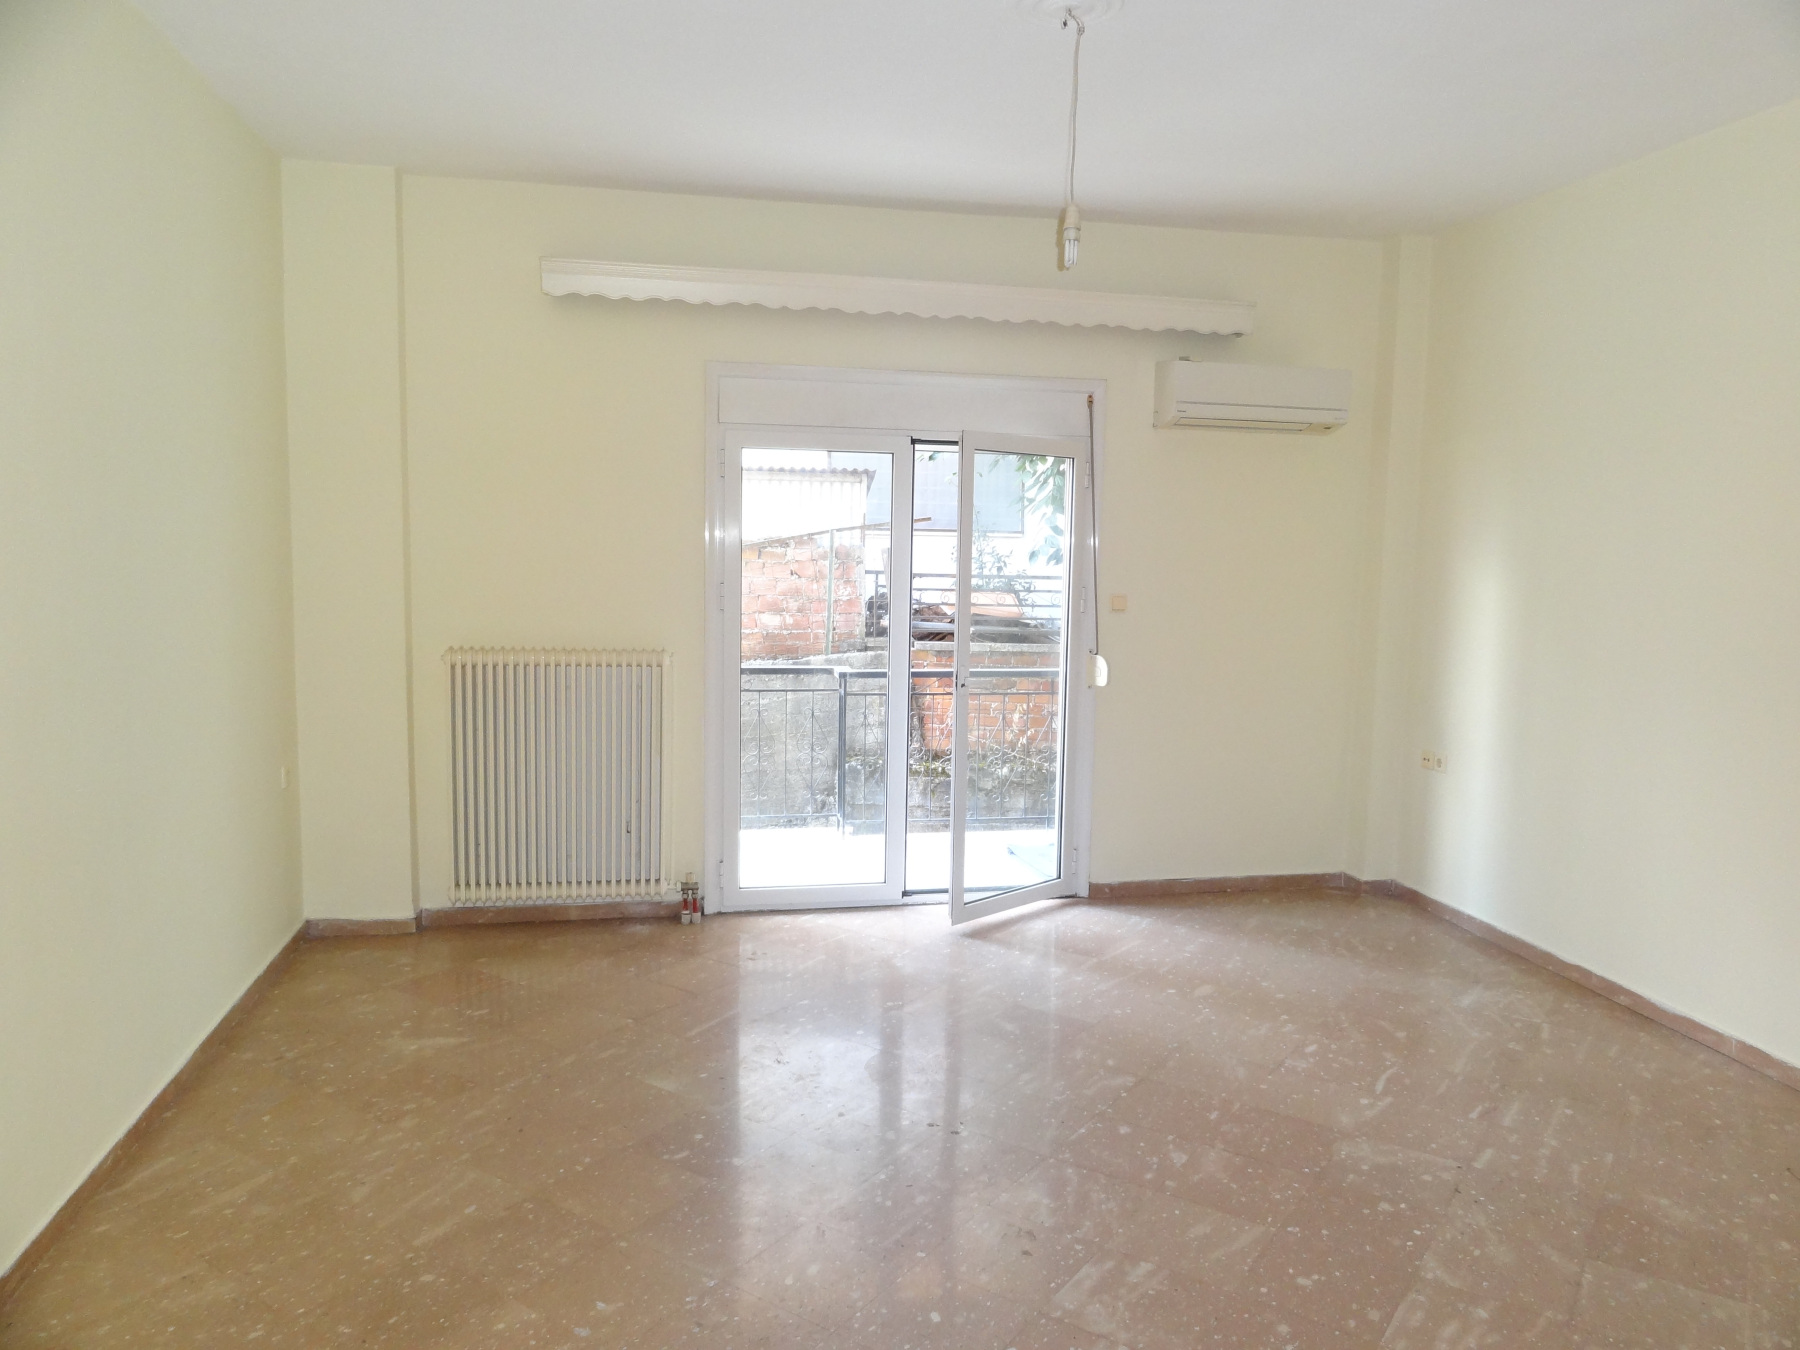 2 bedrooms apartment for rent, 85 sq.m. 1st floor near Hatzikosta hospital in Ampelokipi Ioannina